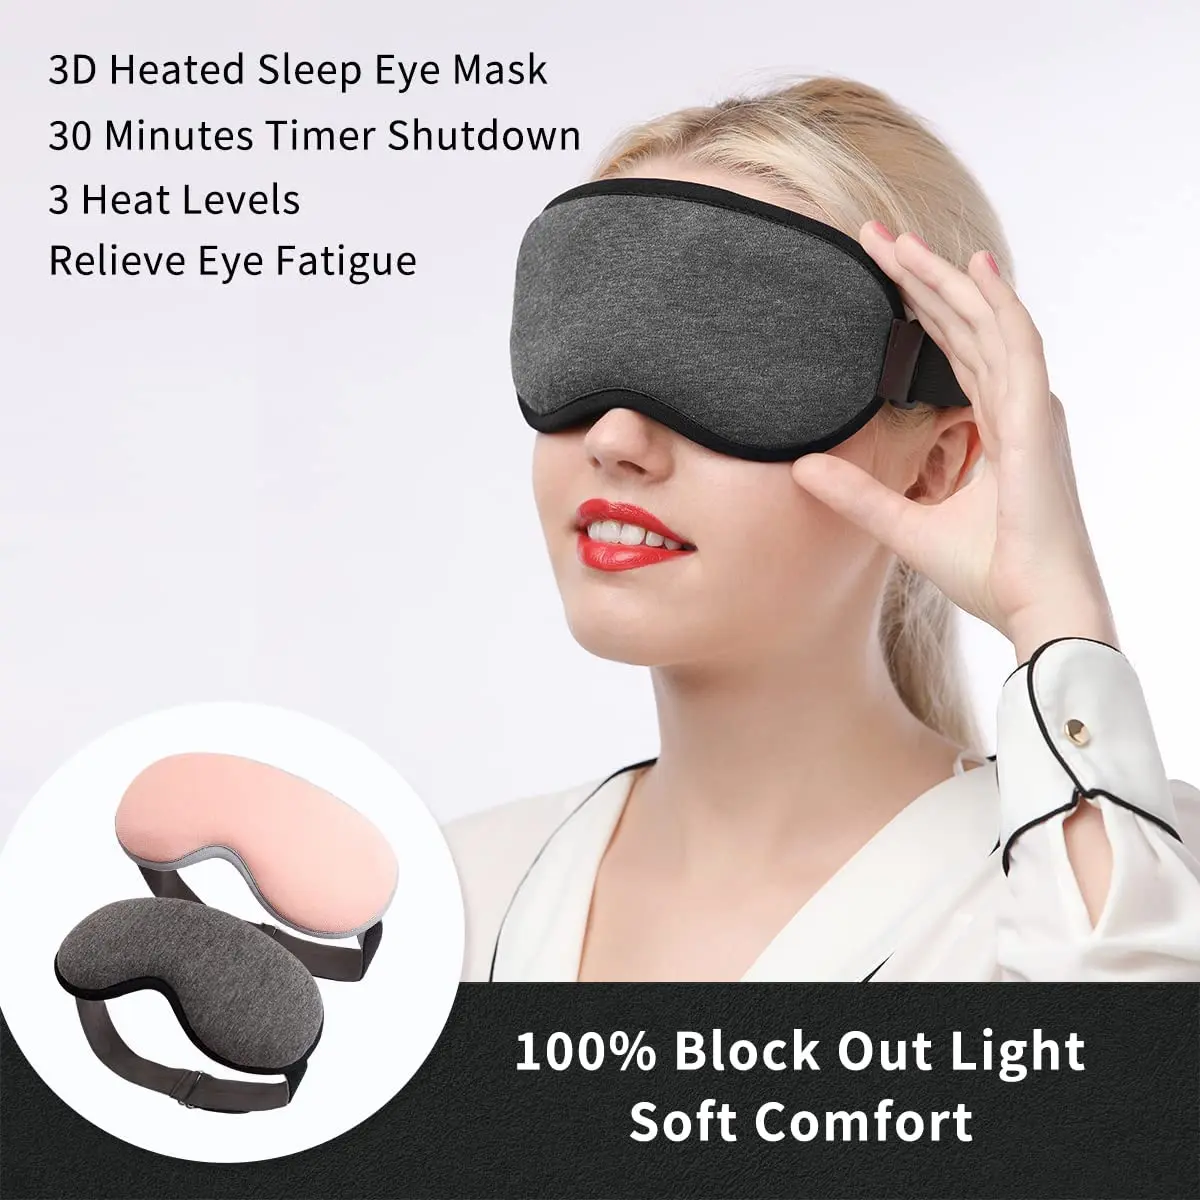 

Heated Eye Mask Warm Eye compress for Dry Eye, Moist Heating Eye Covers for Sleeping Unclog Glands Puffy Eyes Relief, 3D Sleep